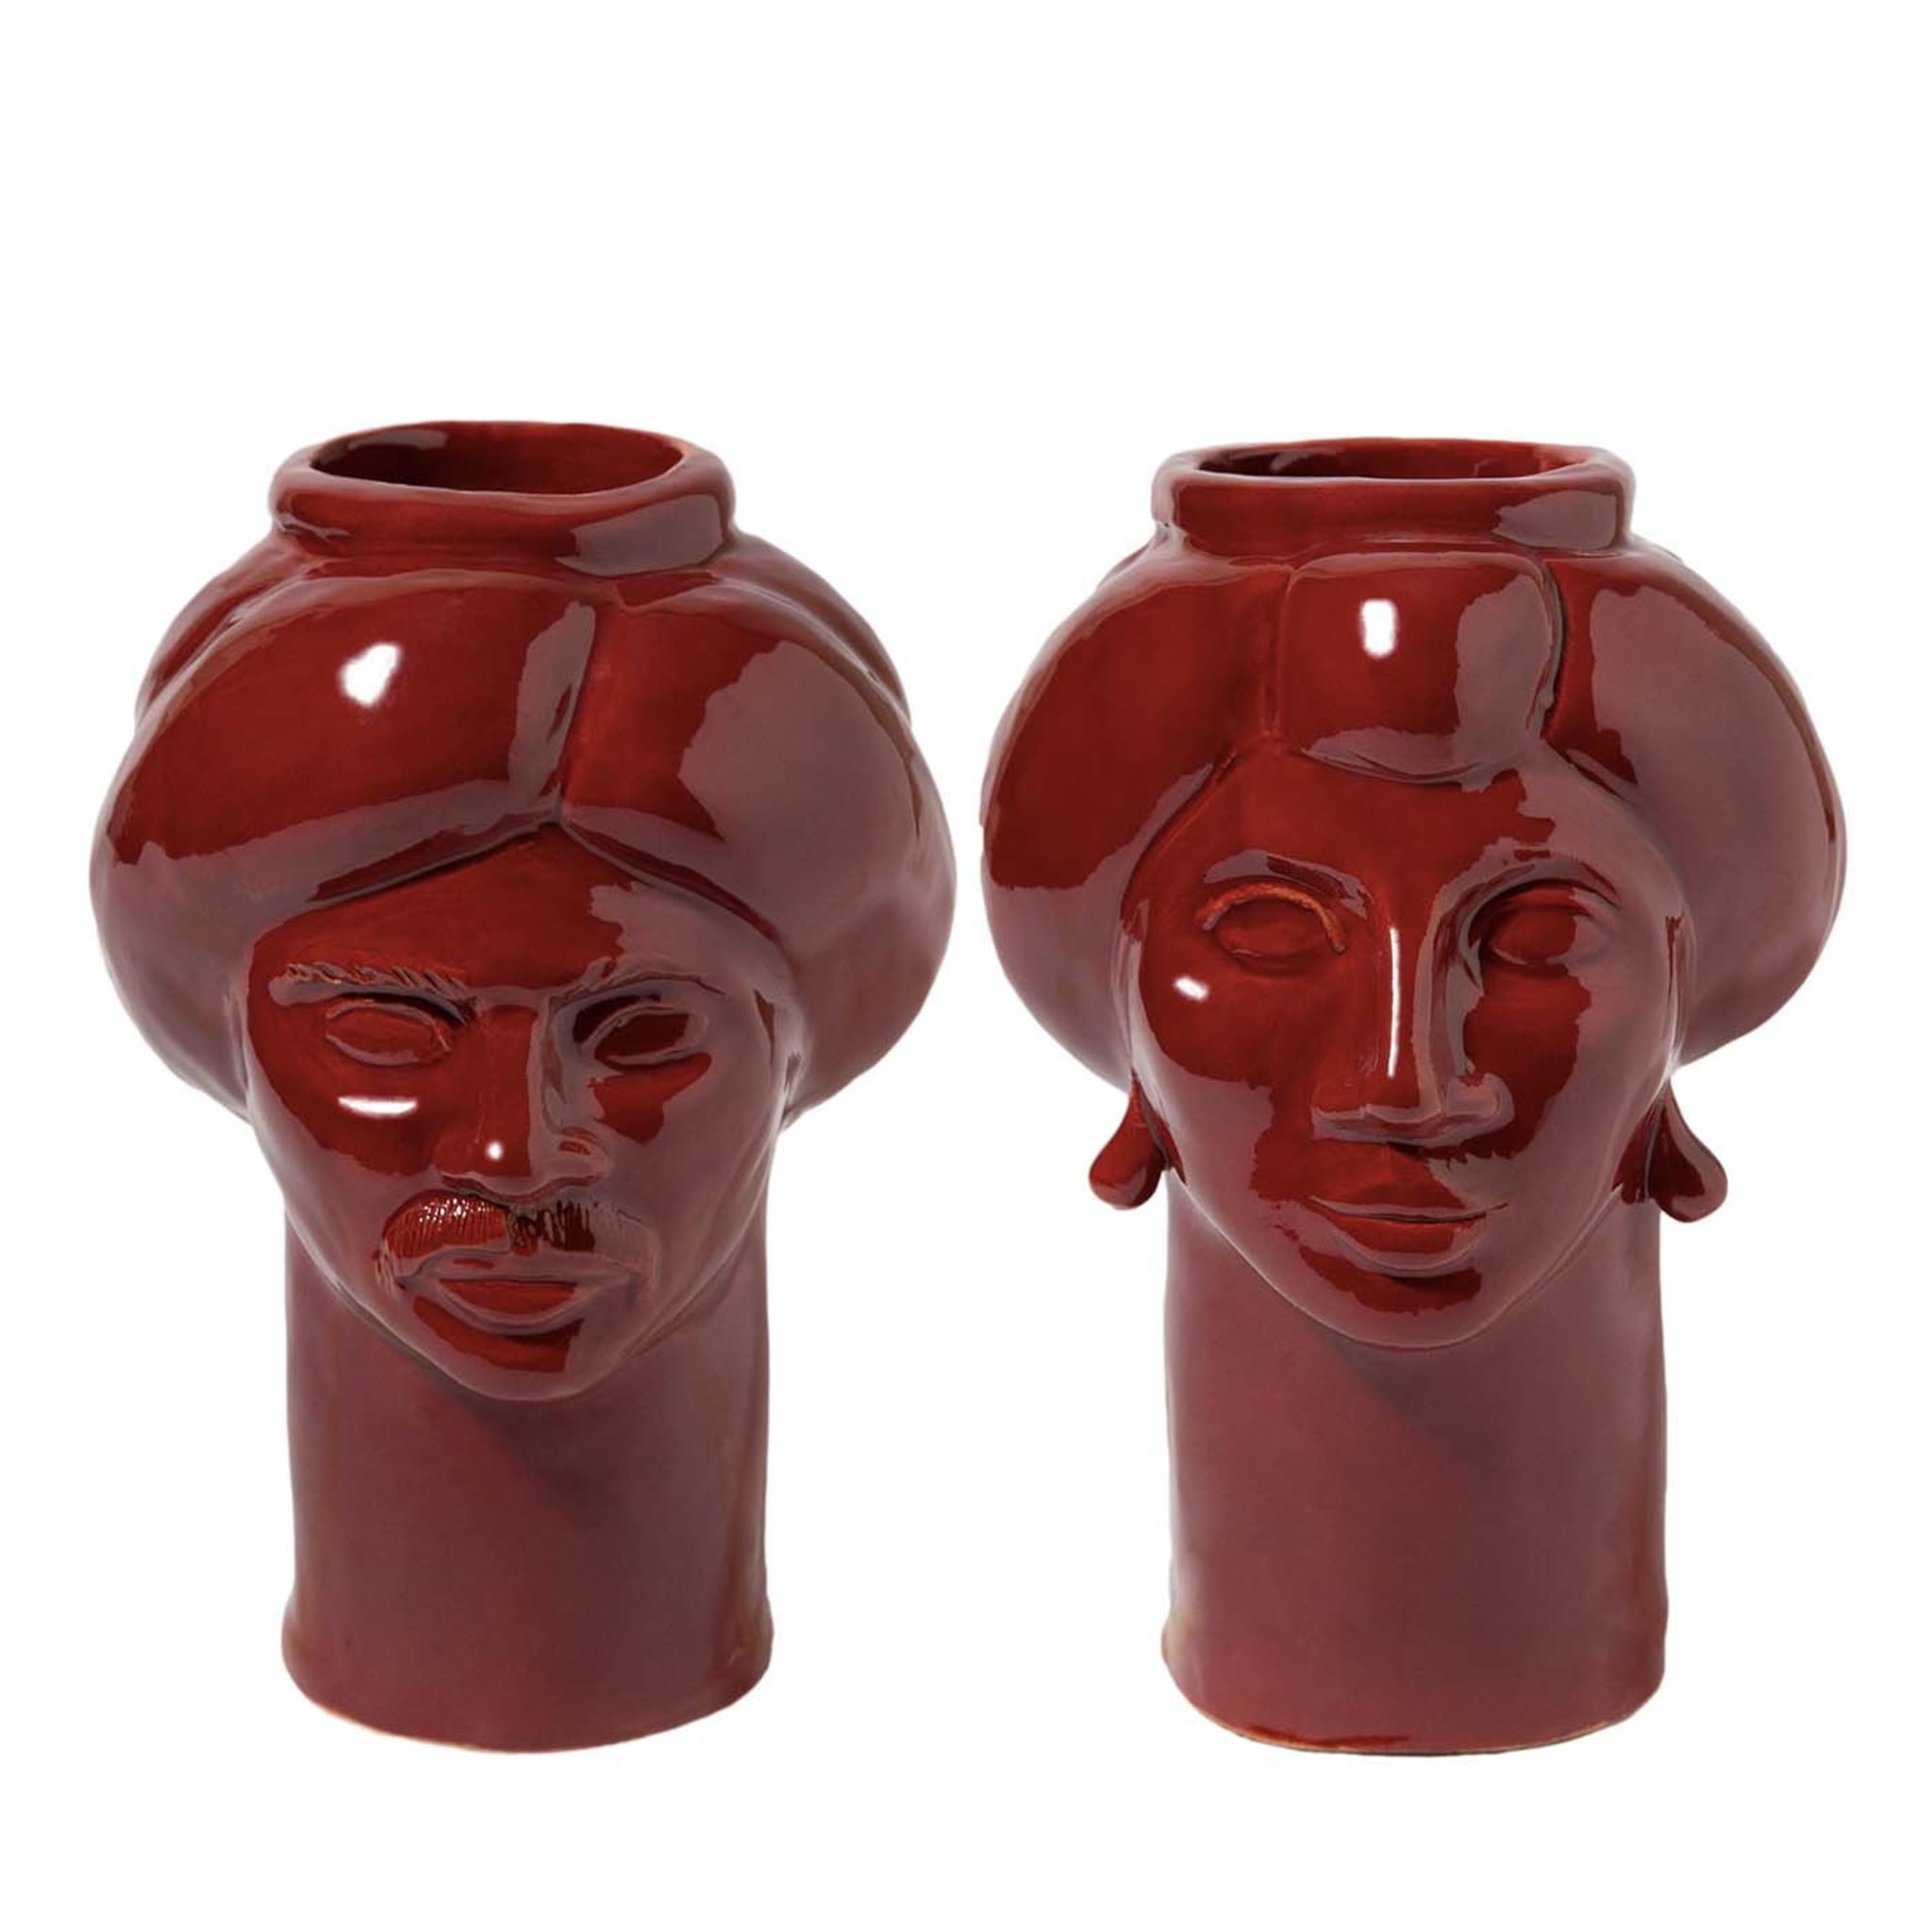 Solimano & Roxelana Red Vases - Main view